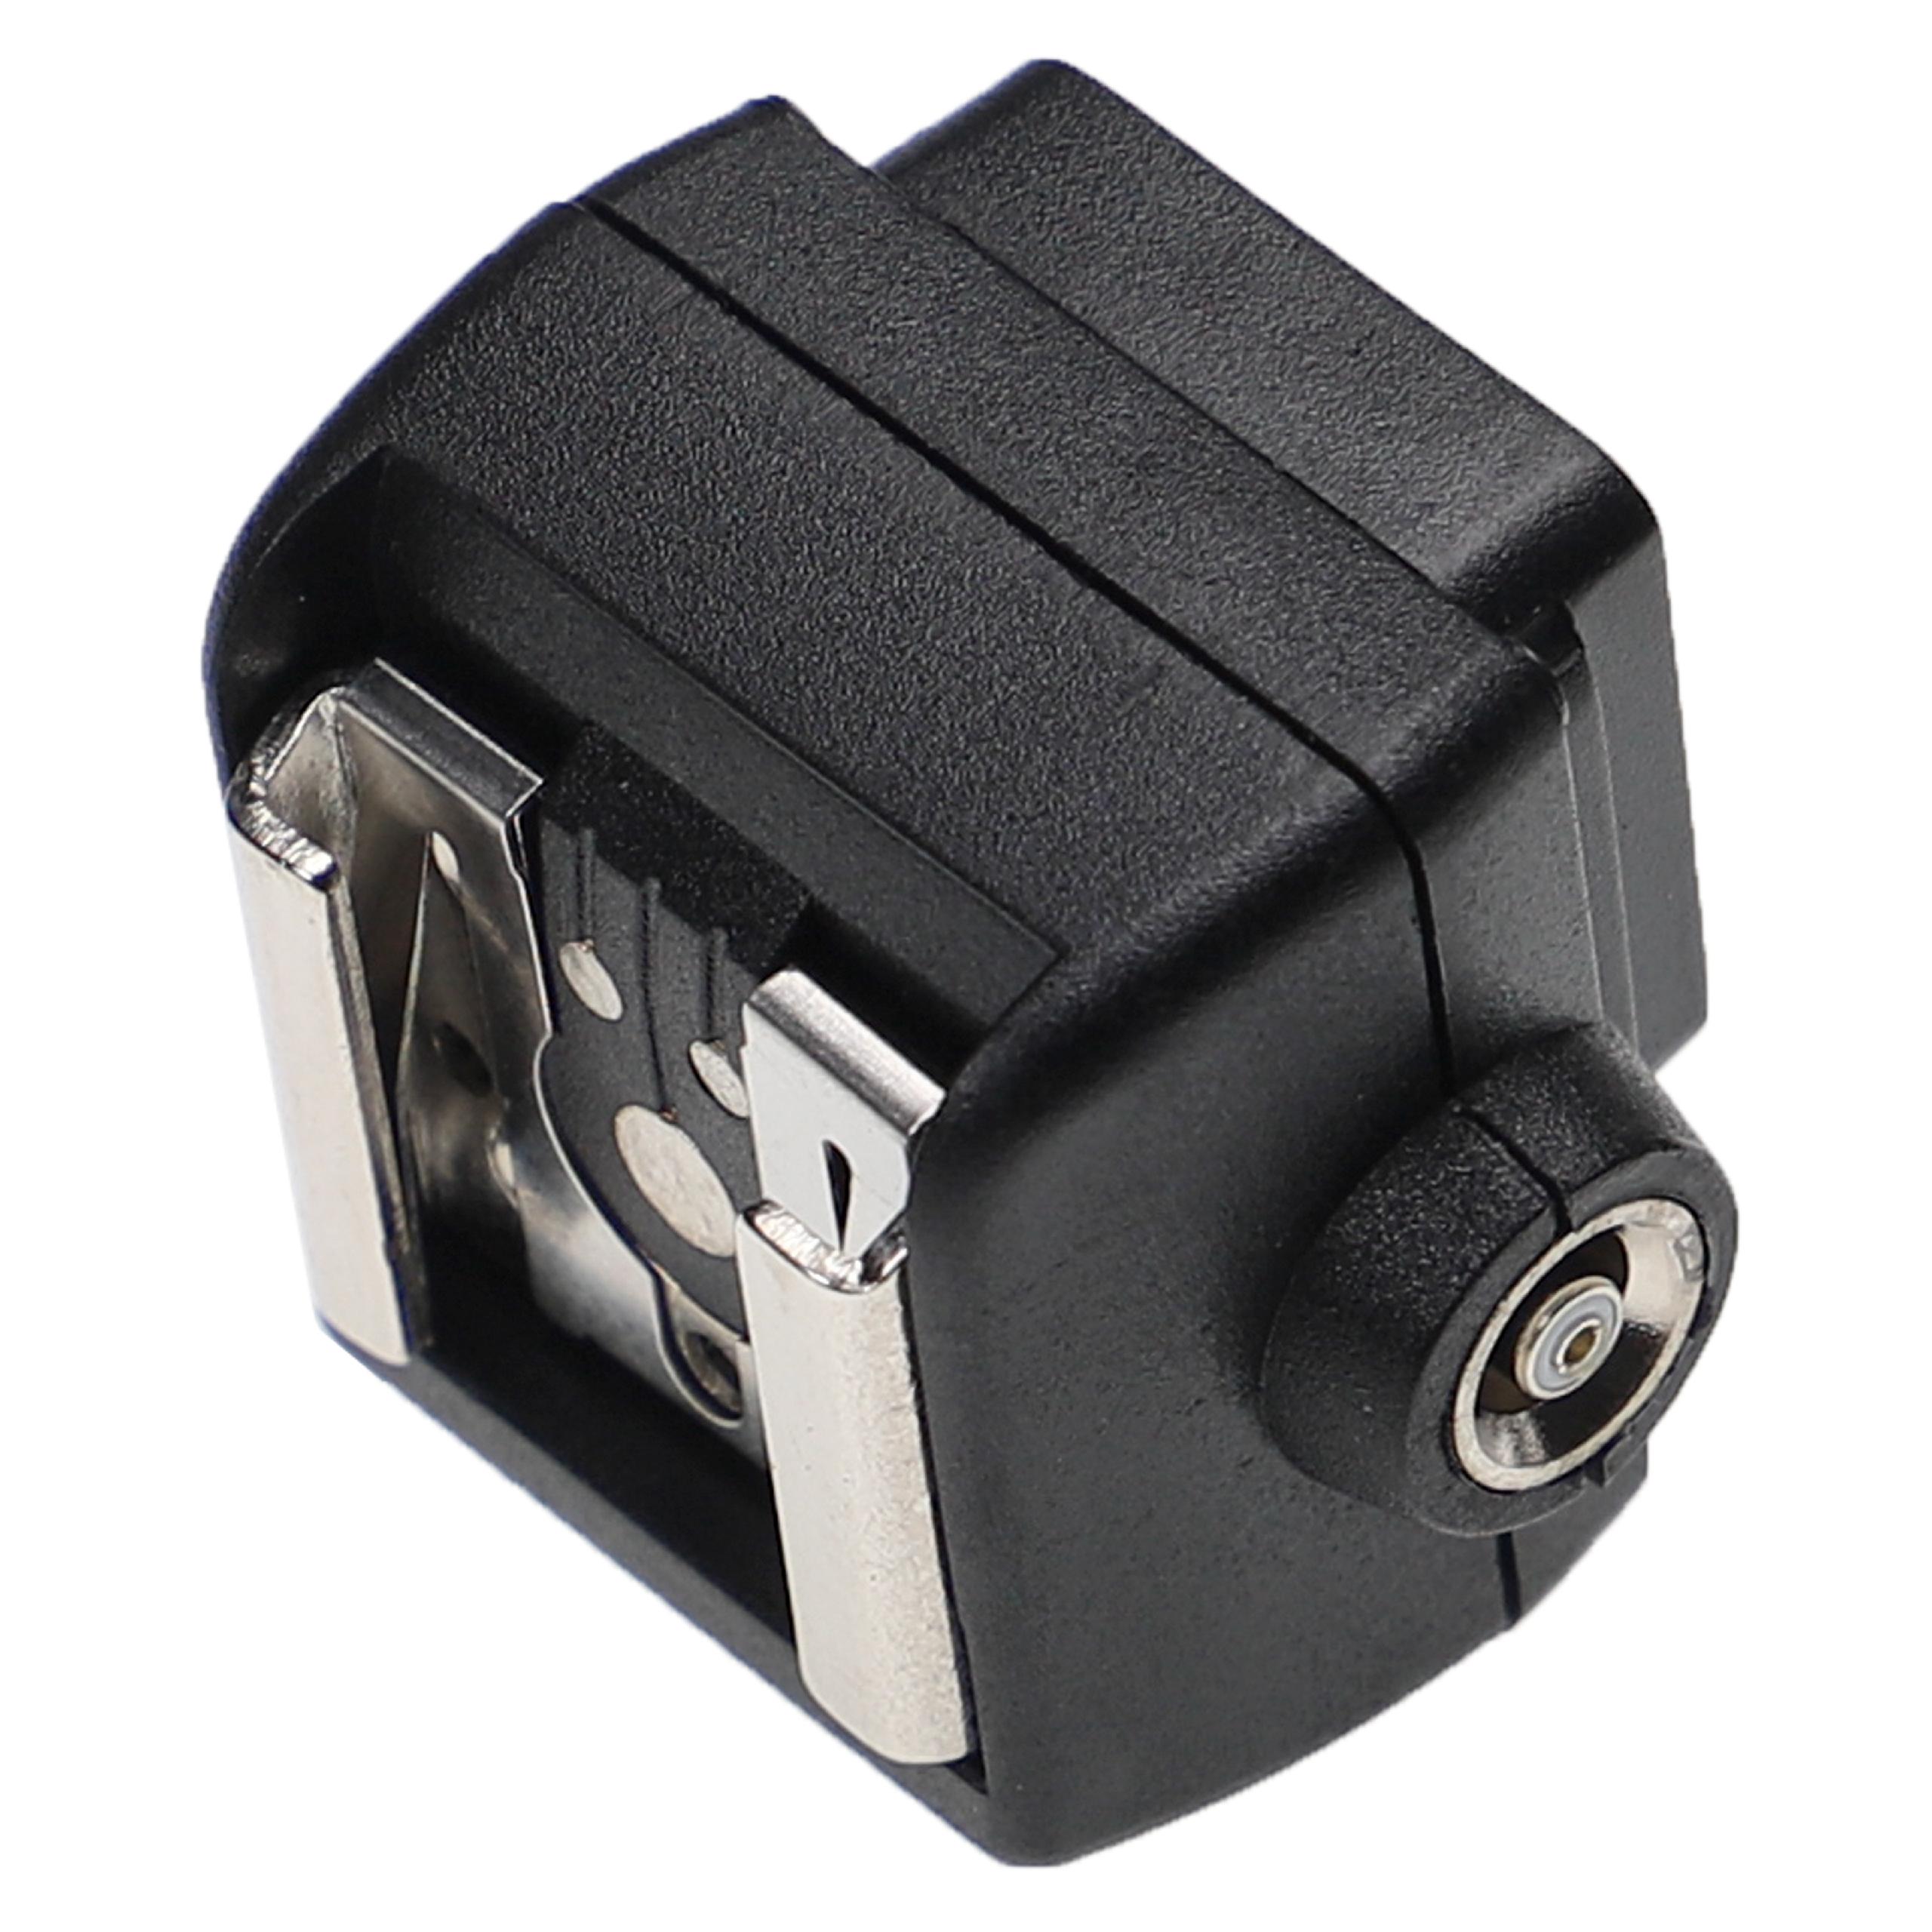 Adattatore slitta flash per Pentax / Nikon / Sony / Canon / Olympus AF540FGZ fotocamera ecc. - Adattatore per 